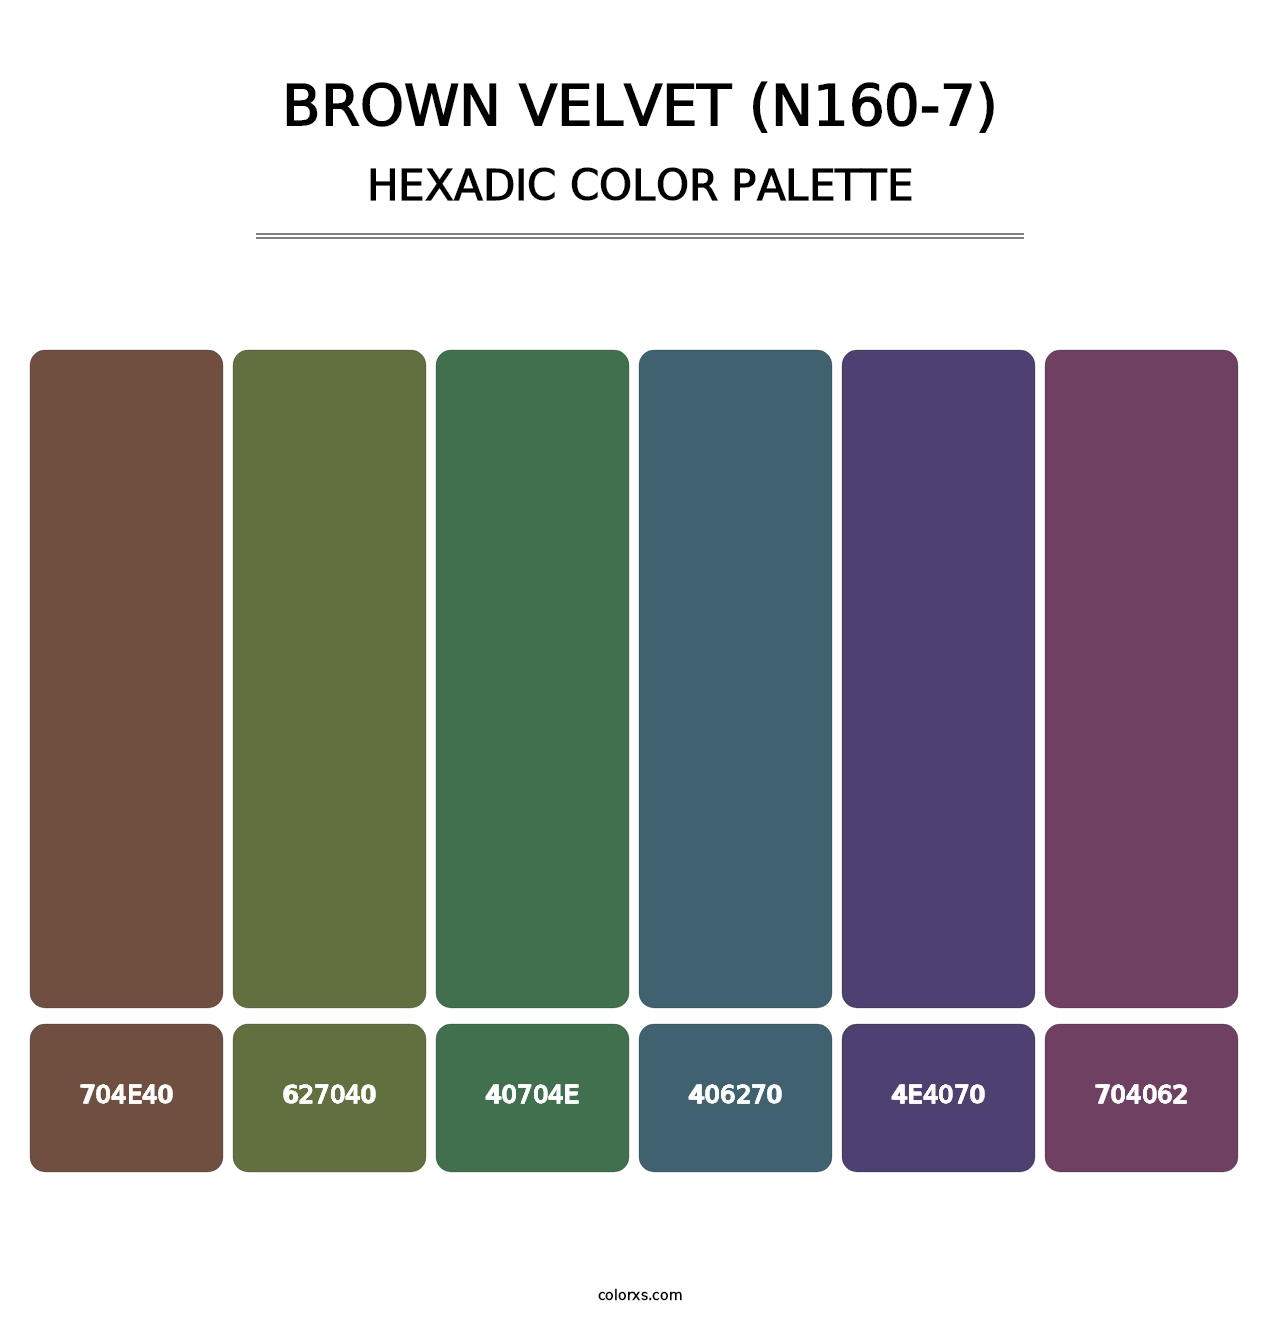 Brown Velvet (N160-7) - Hexadic Color Palette